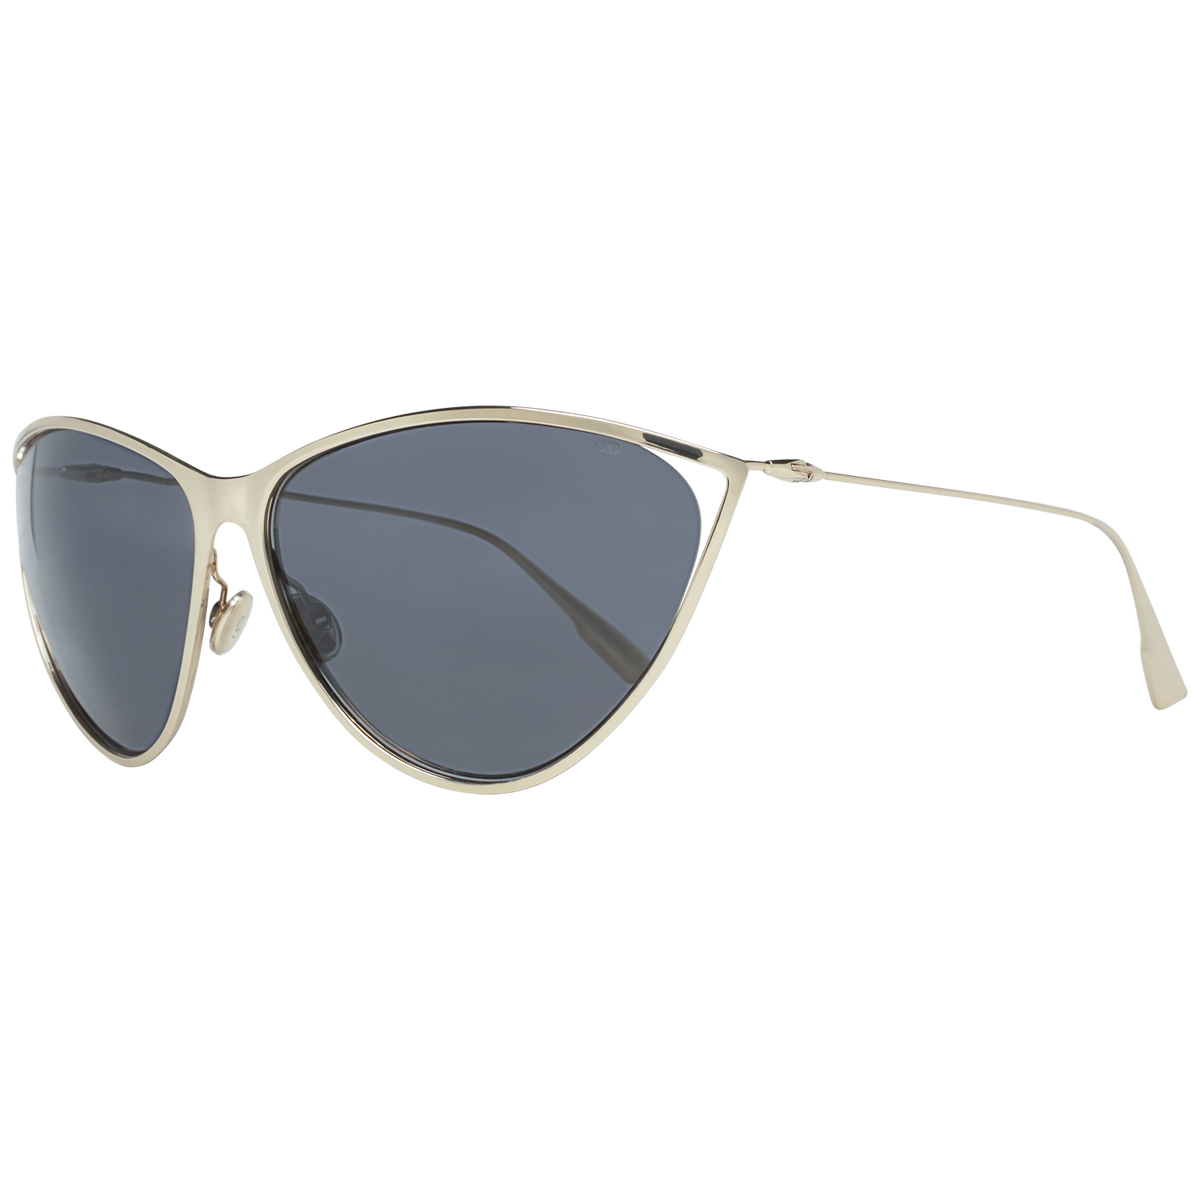 Dior Sunglasses Just 9997 Shipped  Free Stuff Finder